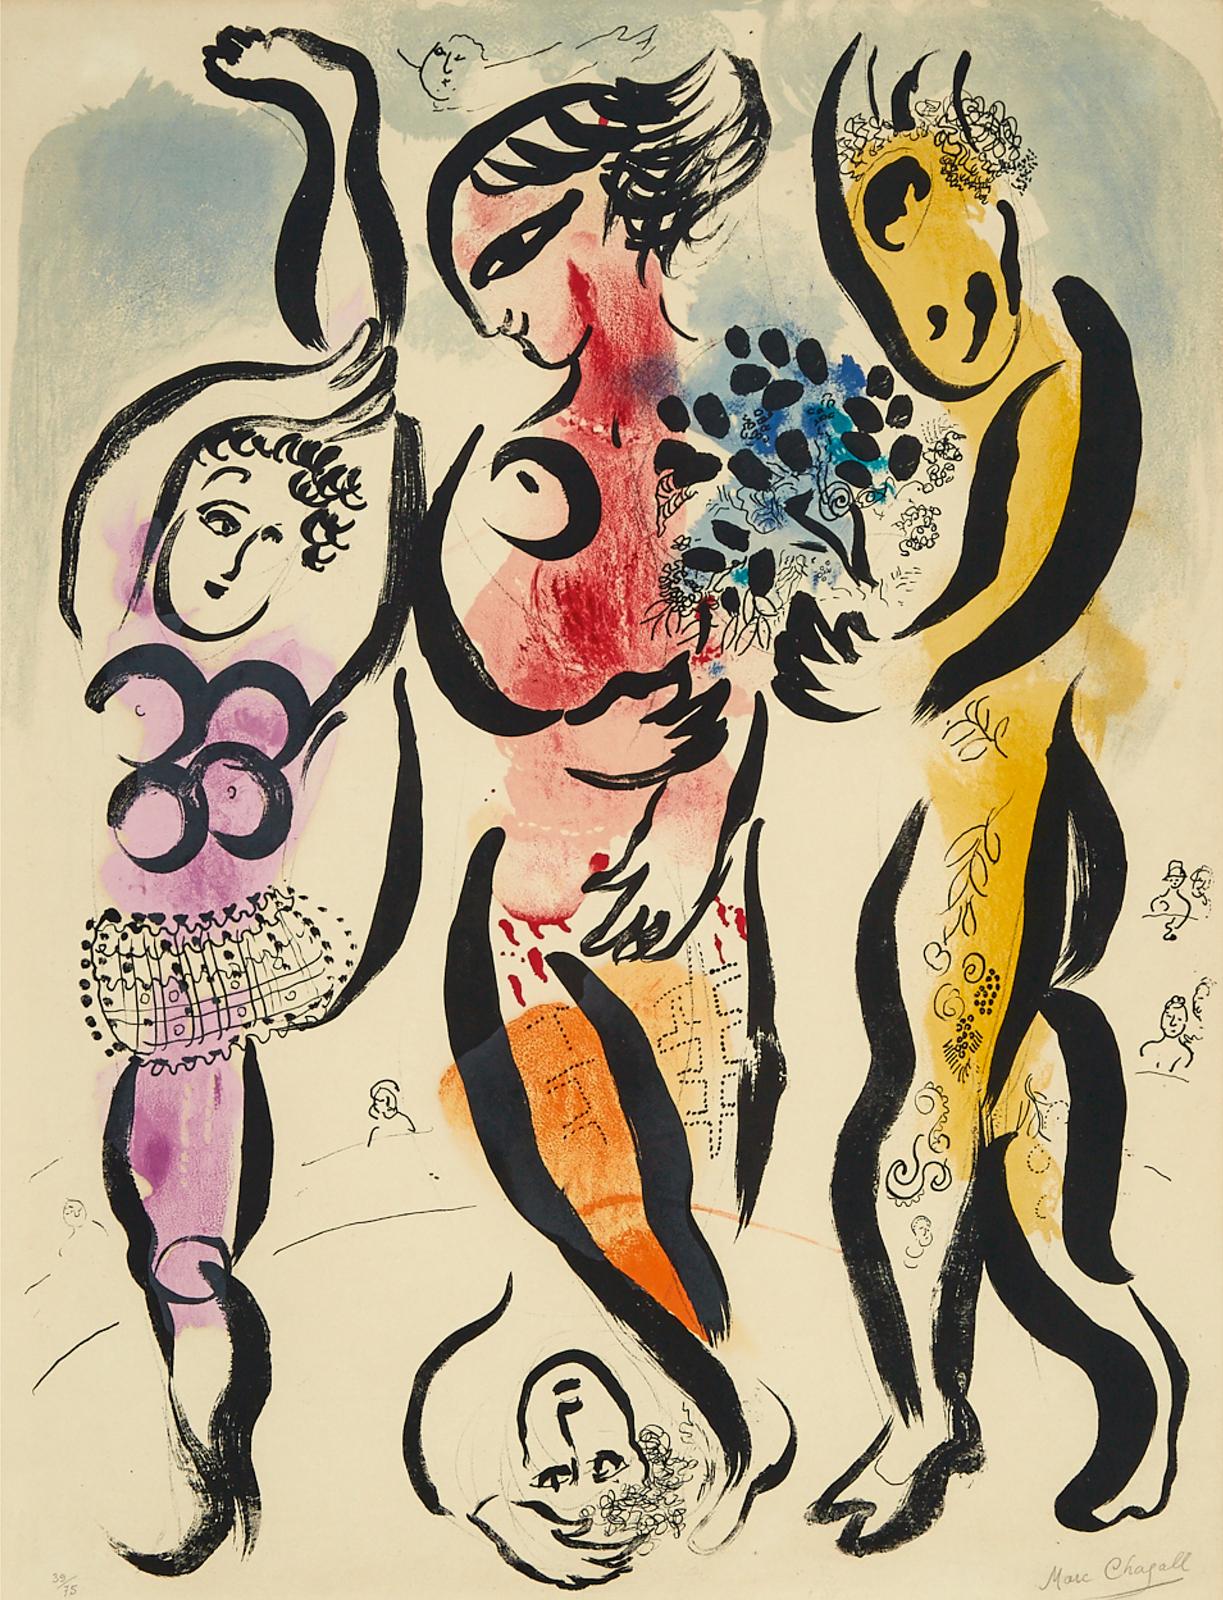 Marc Chagall (1887-1985) - The Three Acrobats, 1956 [mourlot, 169]